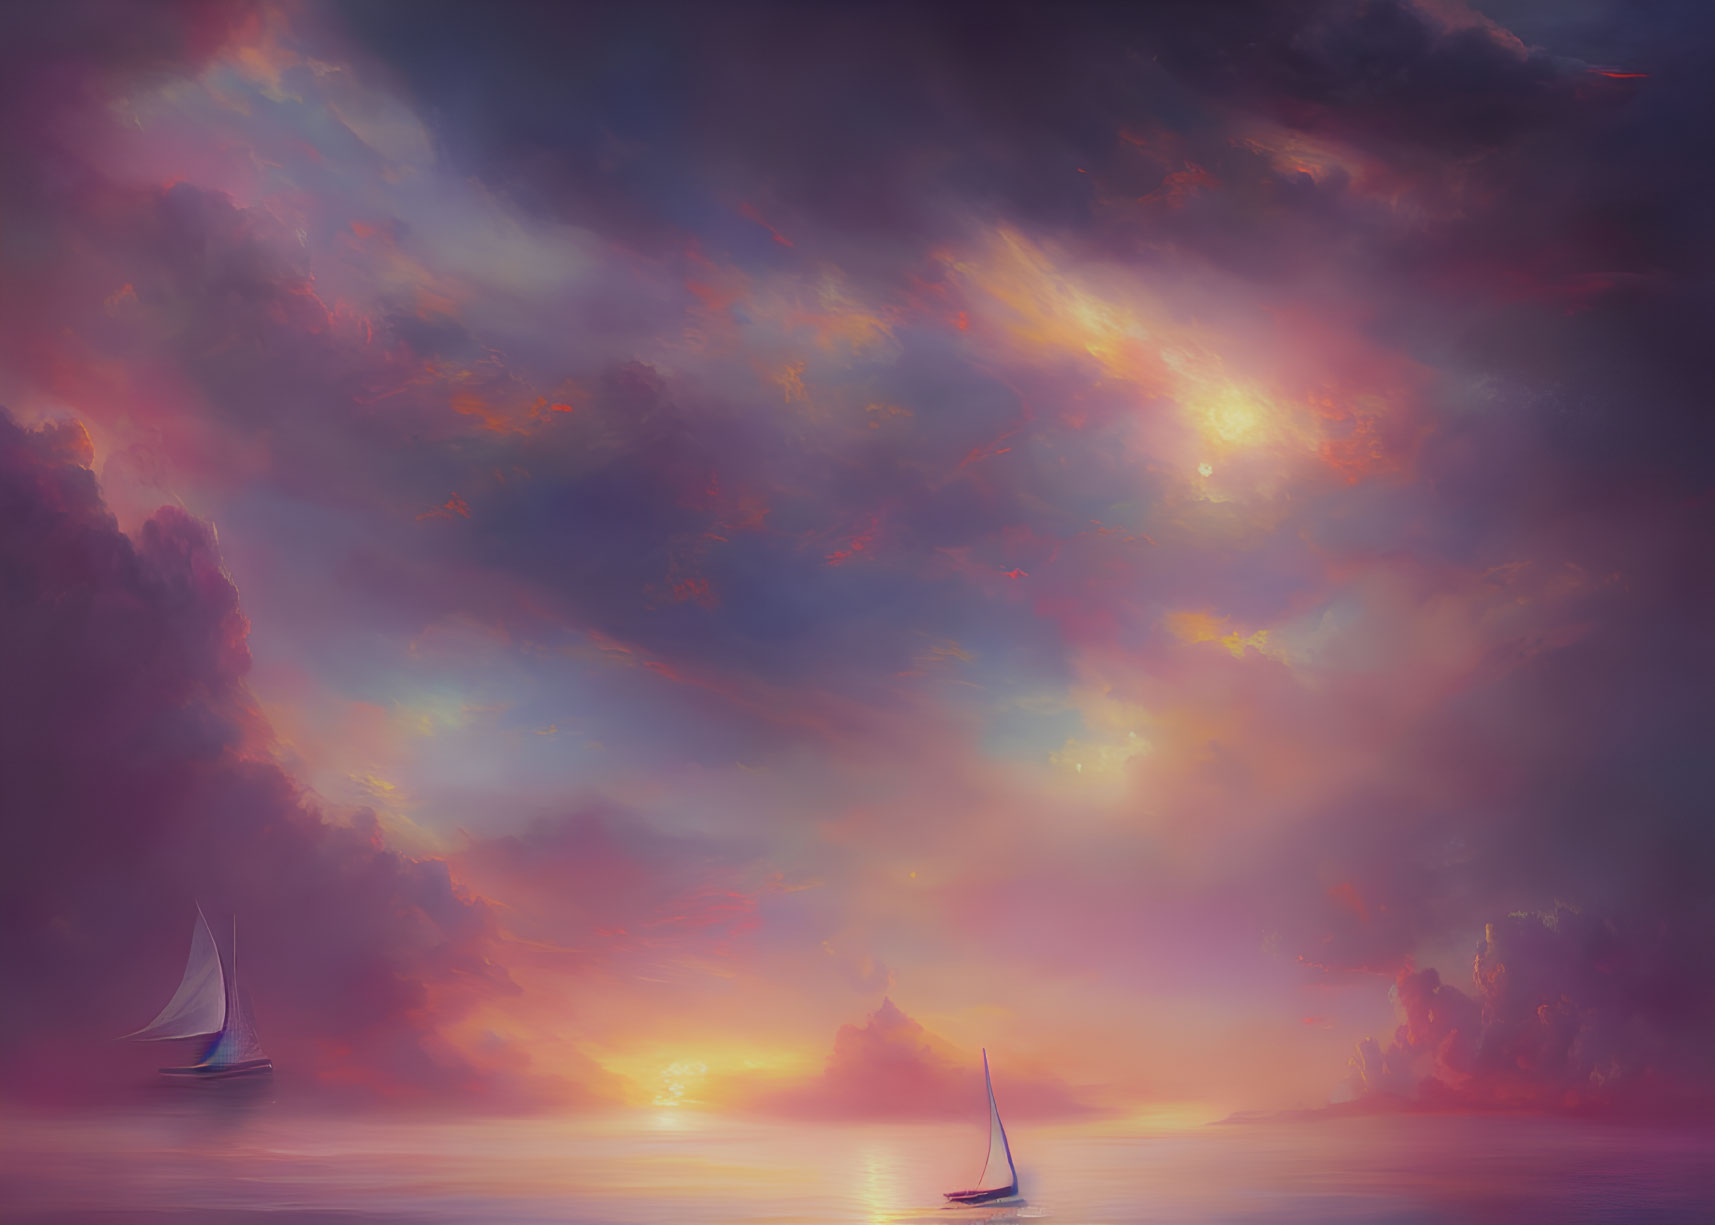 Sailboats on serene sea under vibrant sunset sky